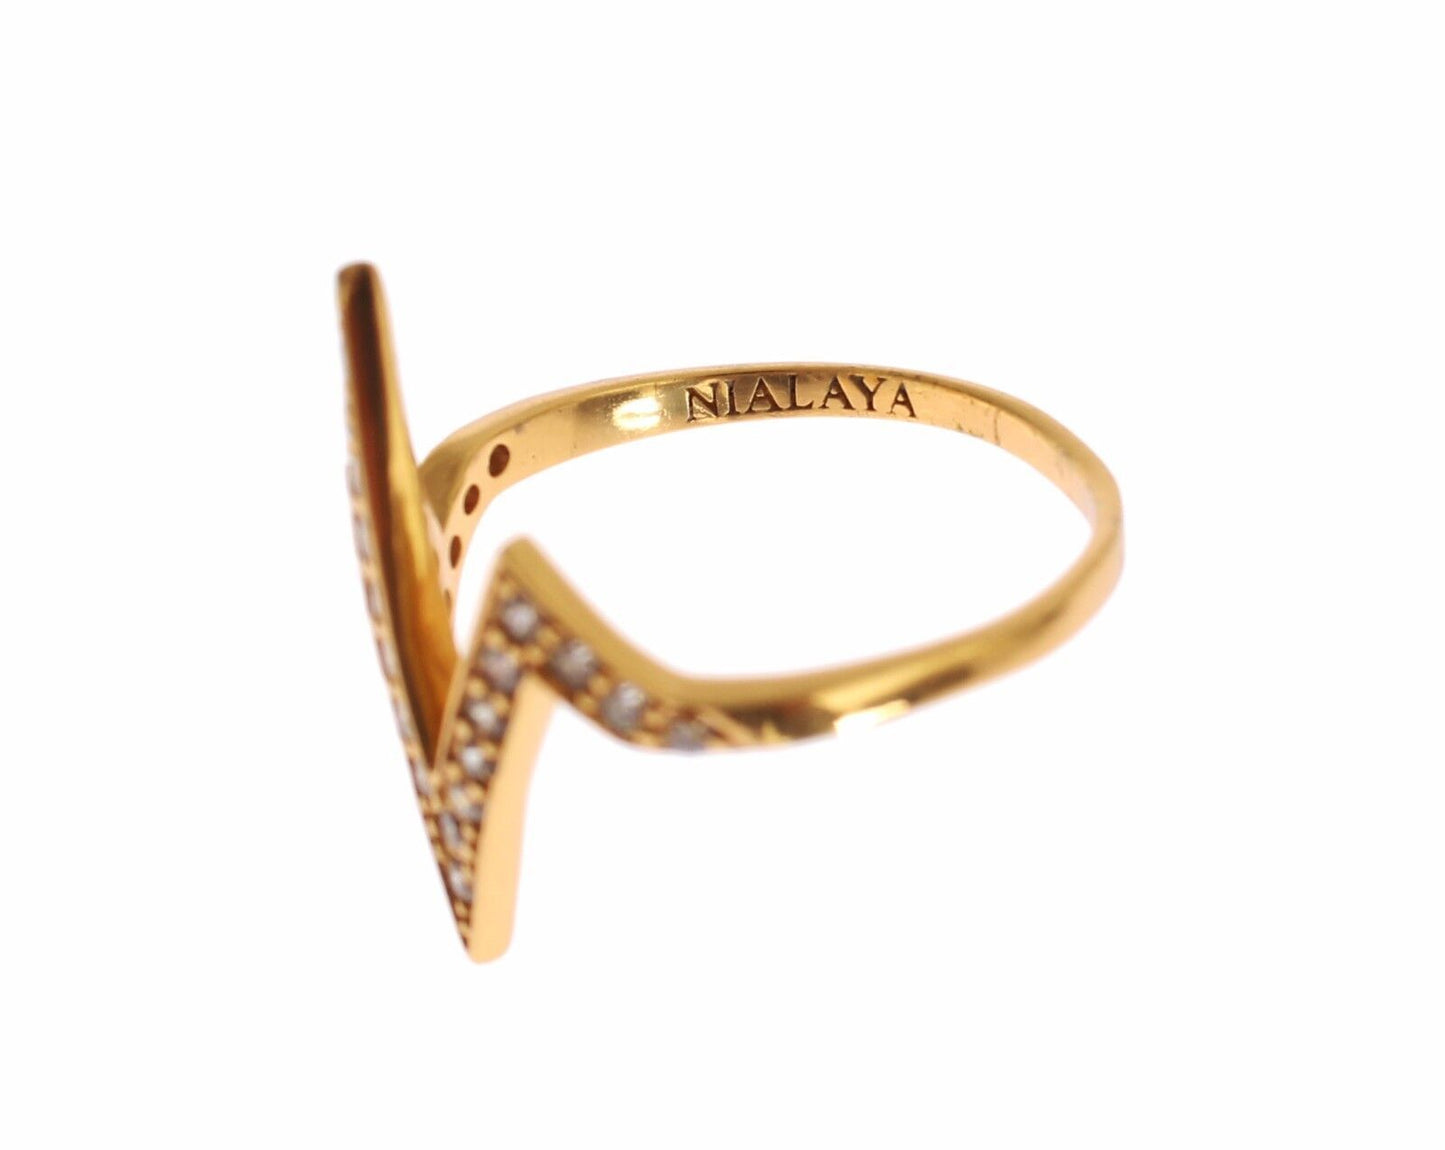 Nialaya Glamorous Gold Plated Sterling Silver Ring